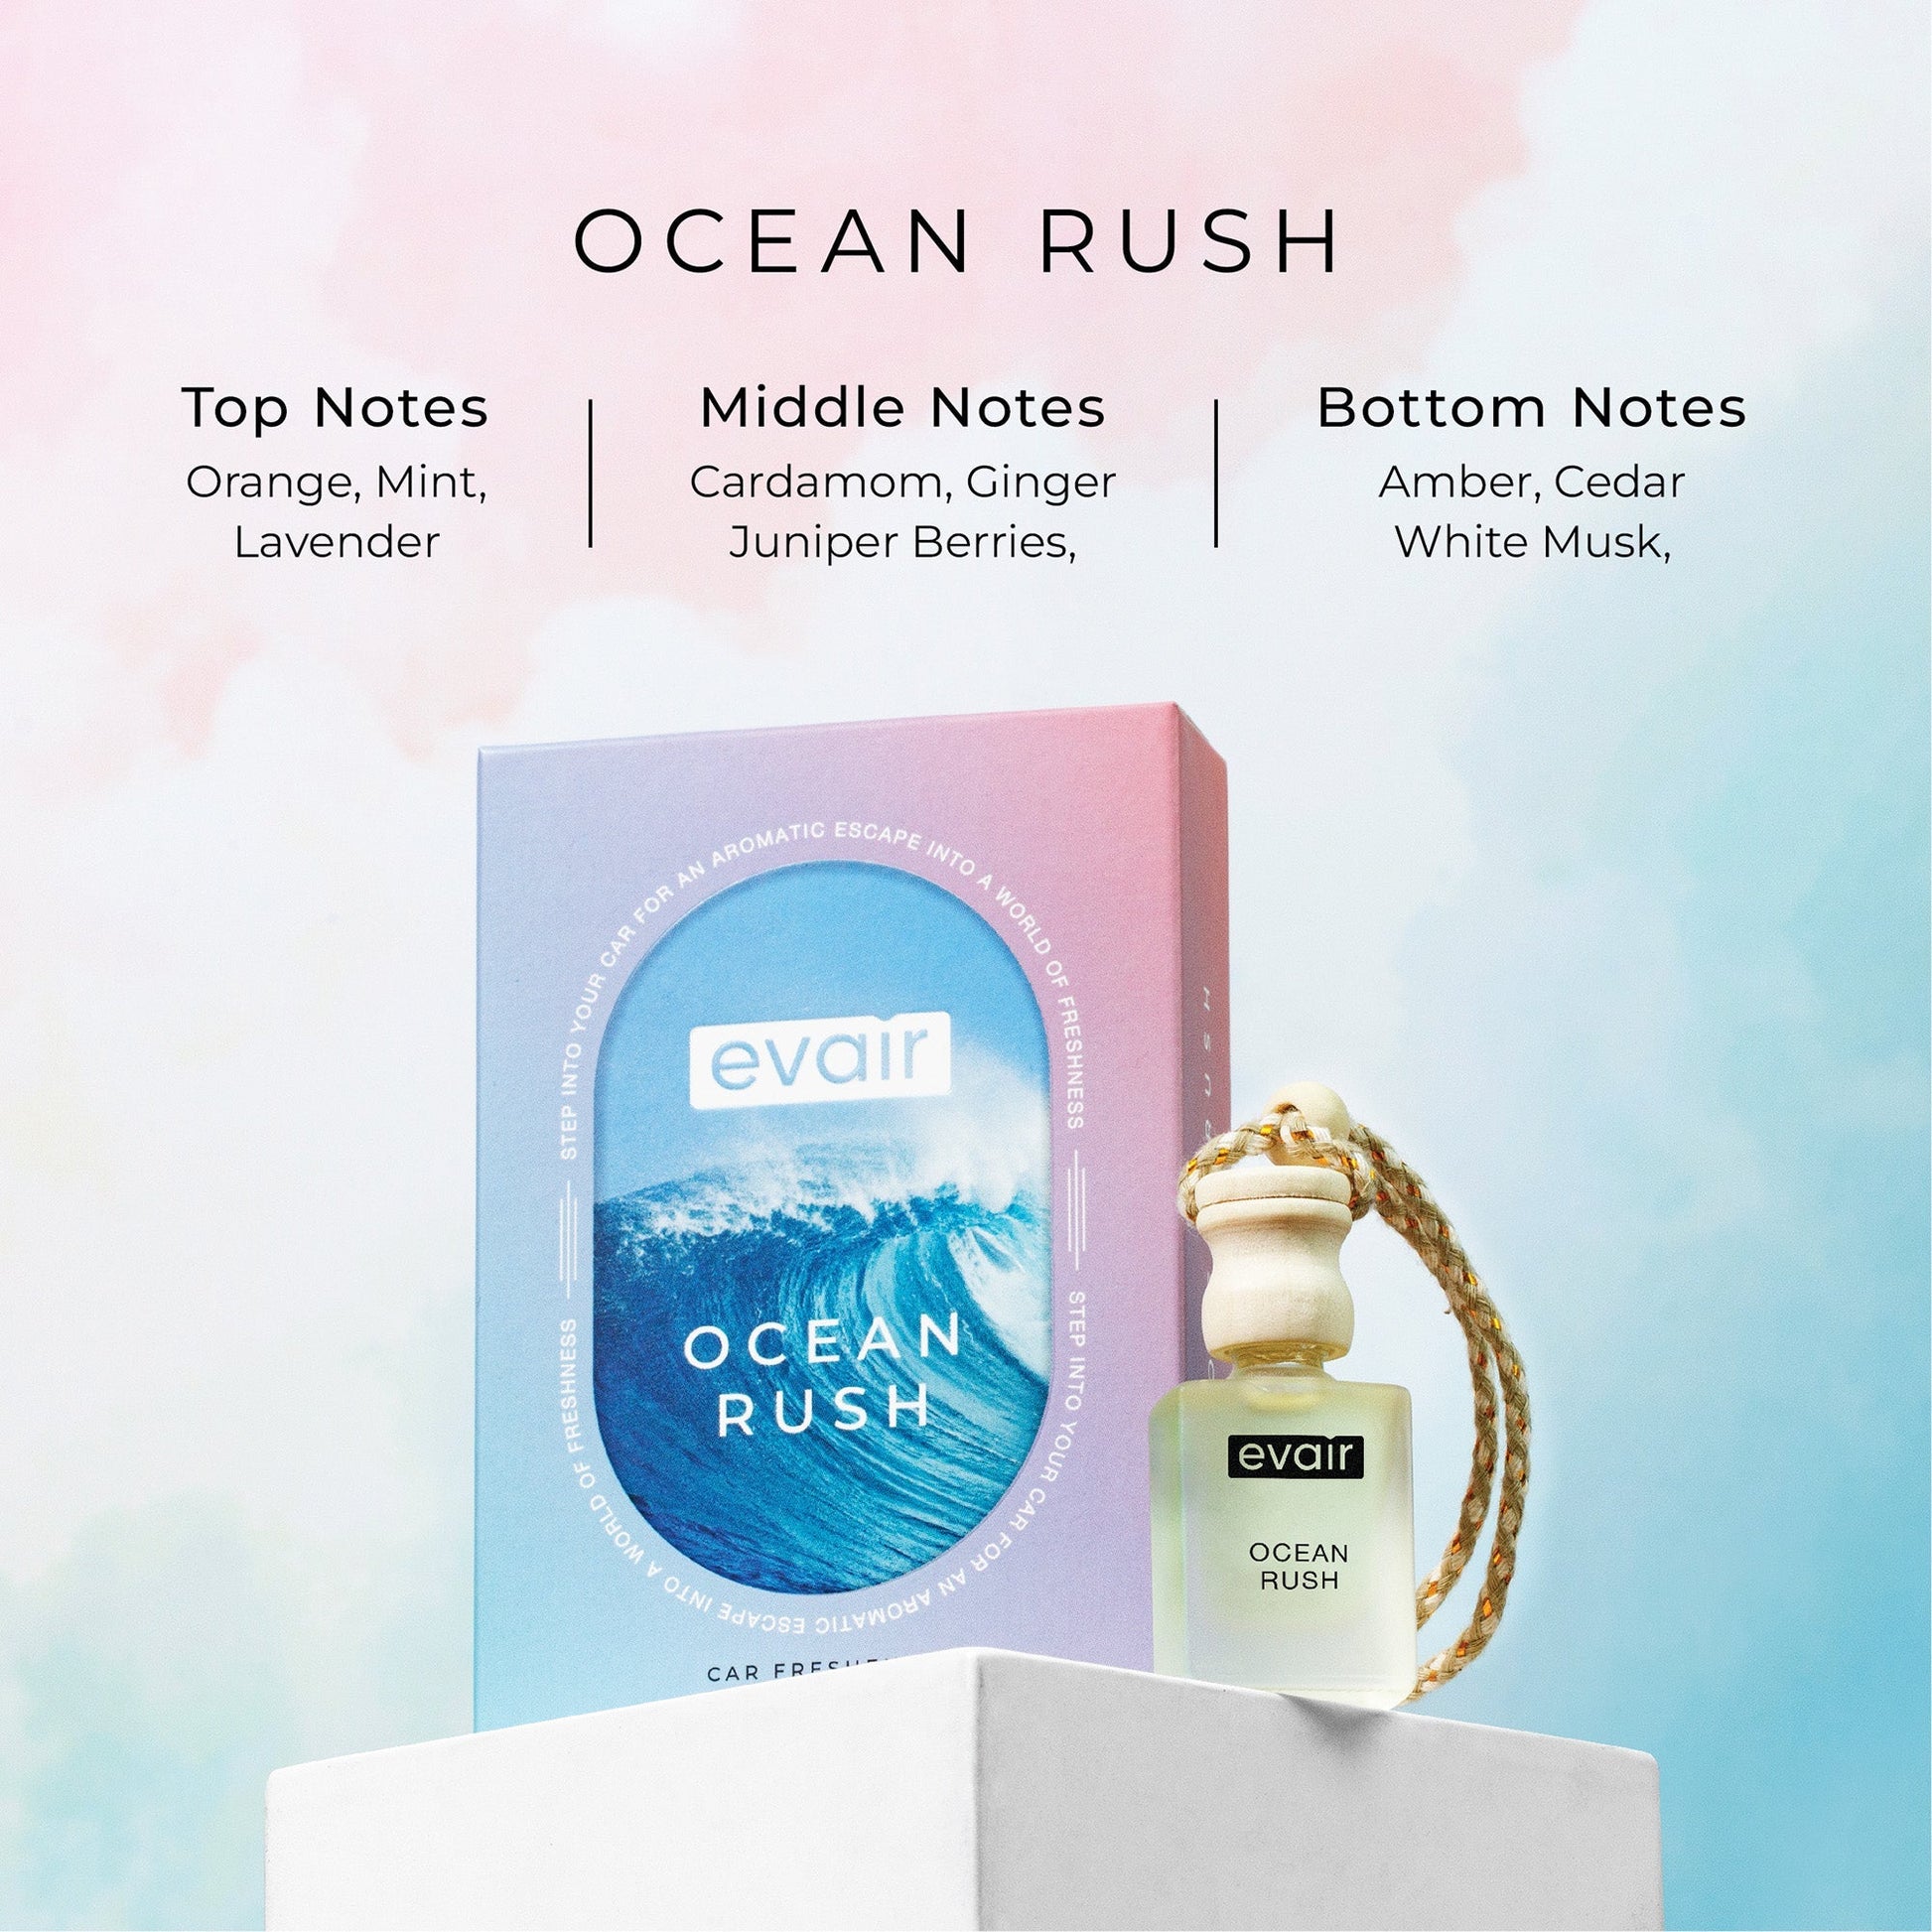 Different Notes of Evairs Ocean Car Perfume